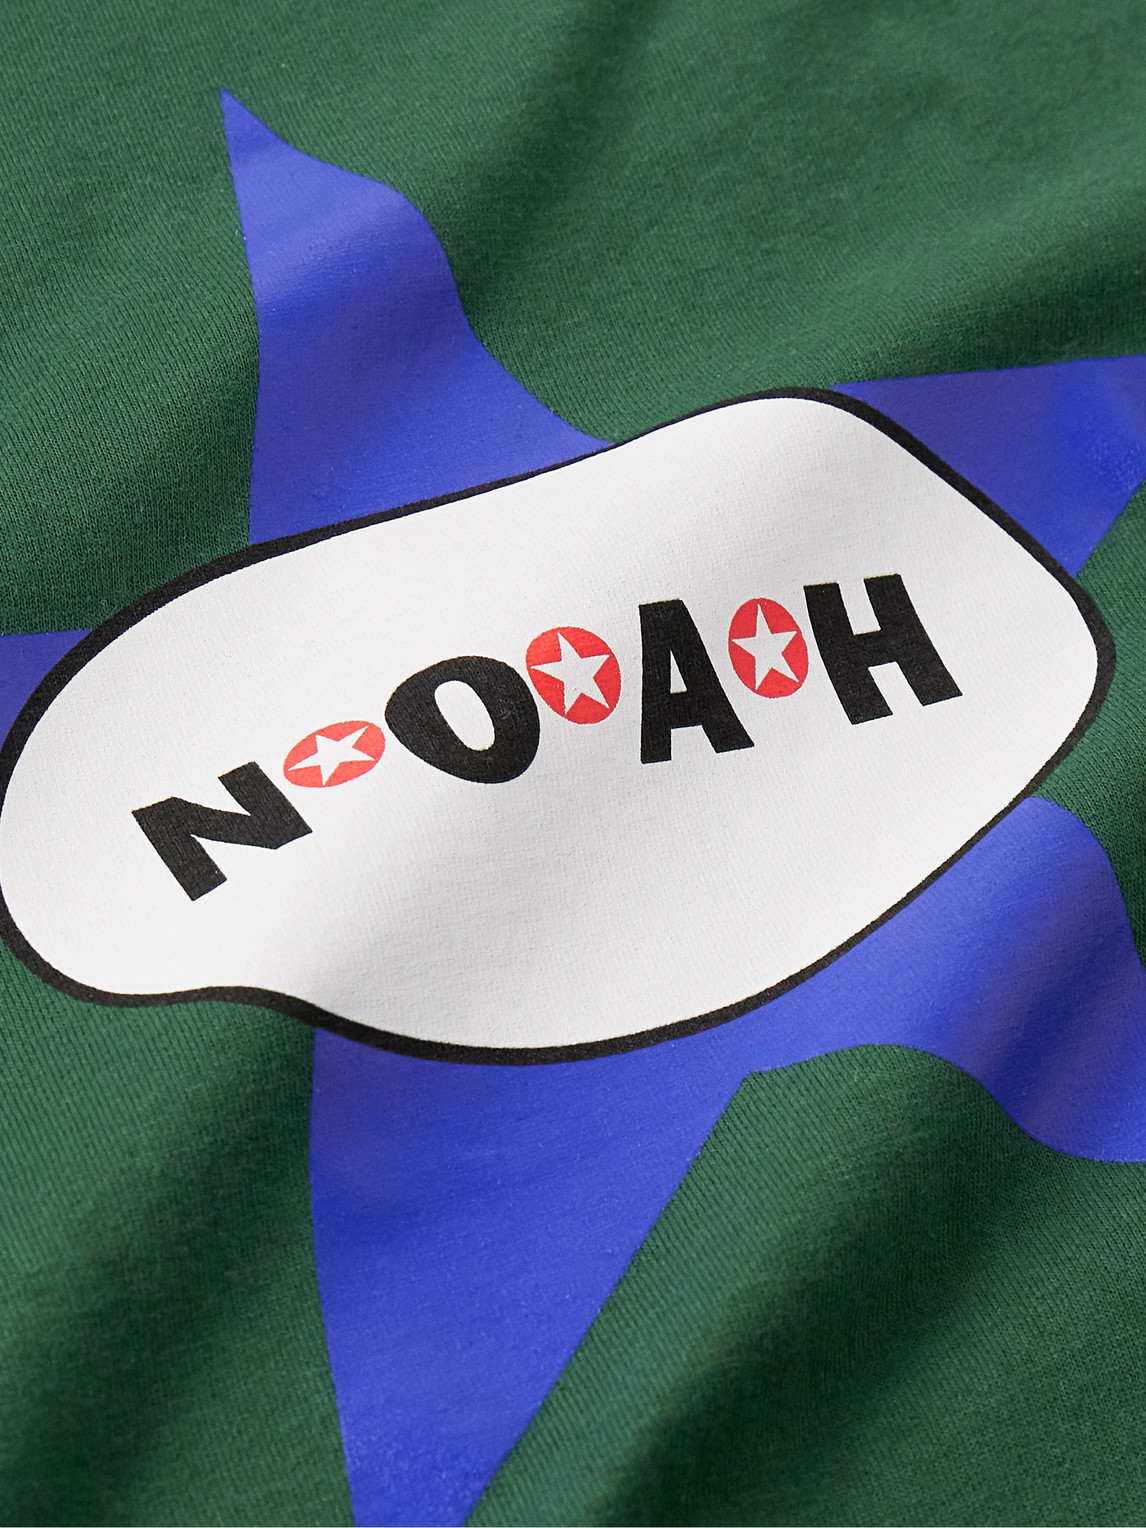 Shop Noah Always Got The Blues Printed Cotton-jersey T-shirt In Green